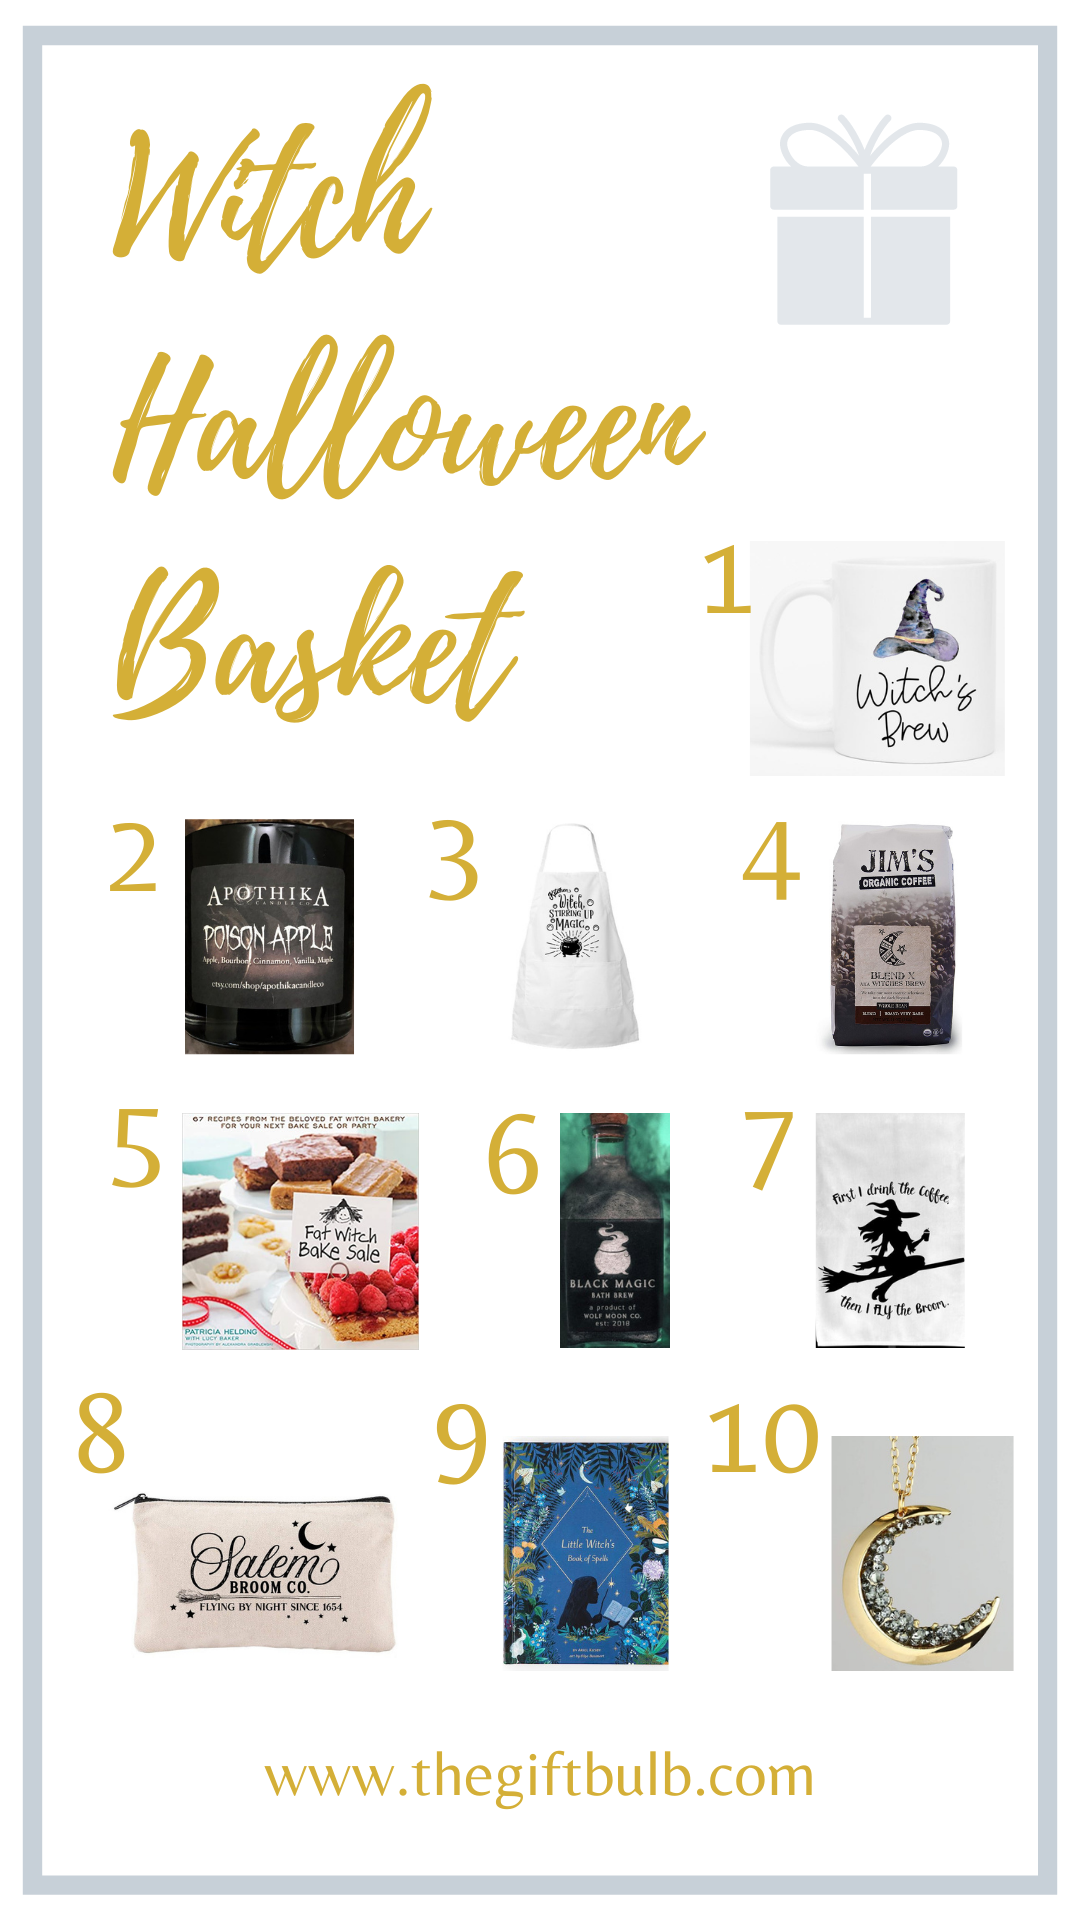 Witch Halloween Basket